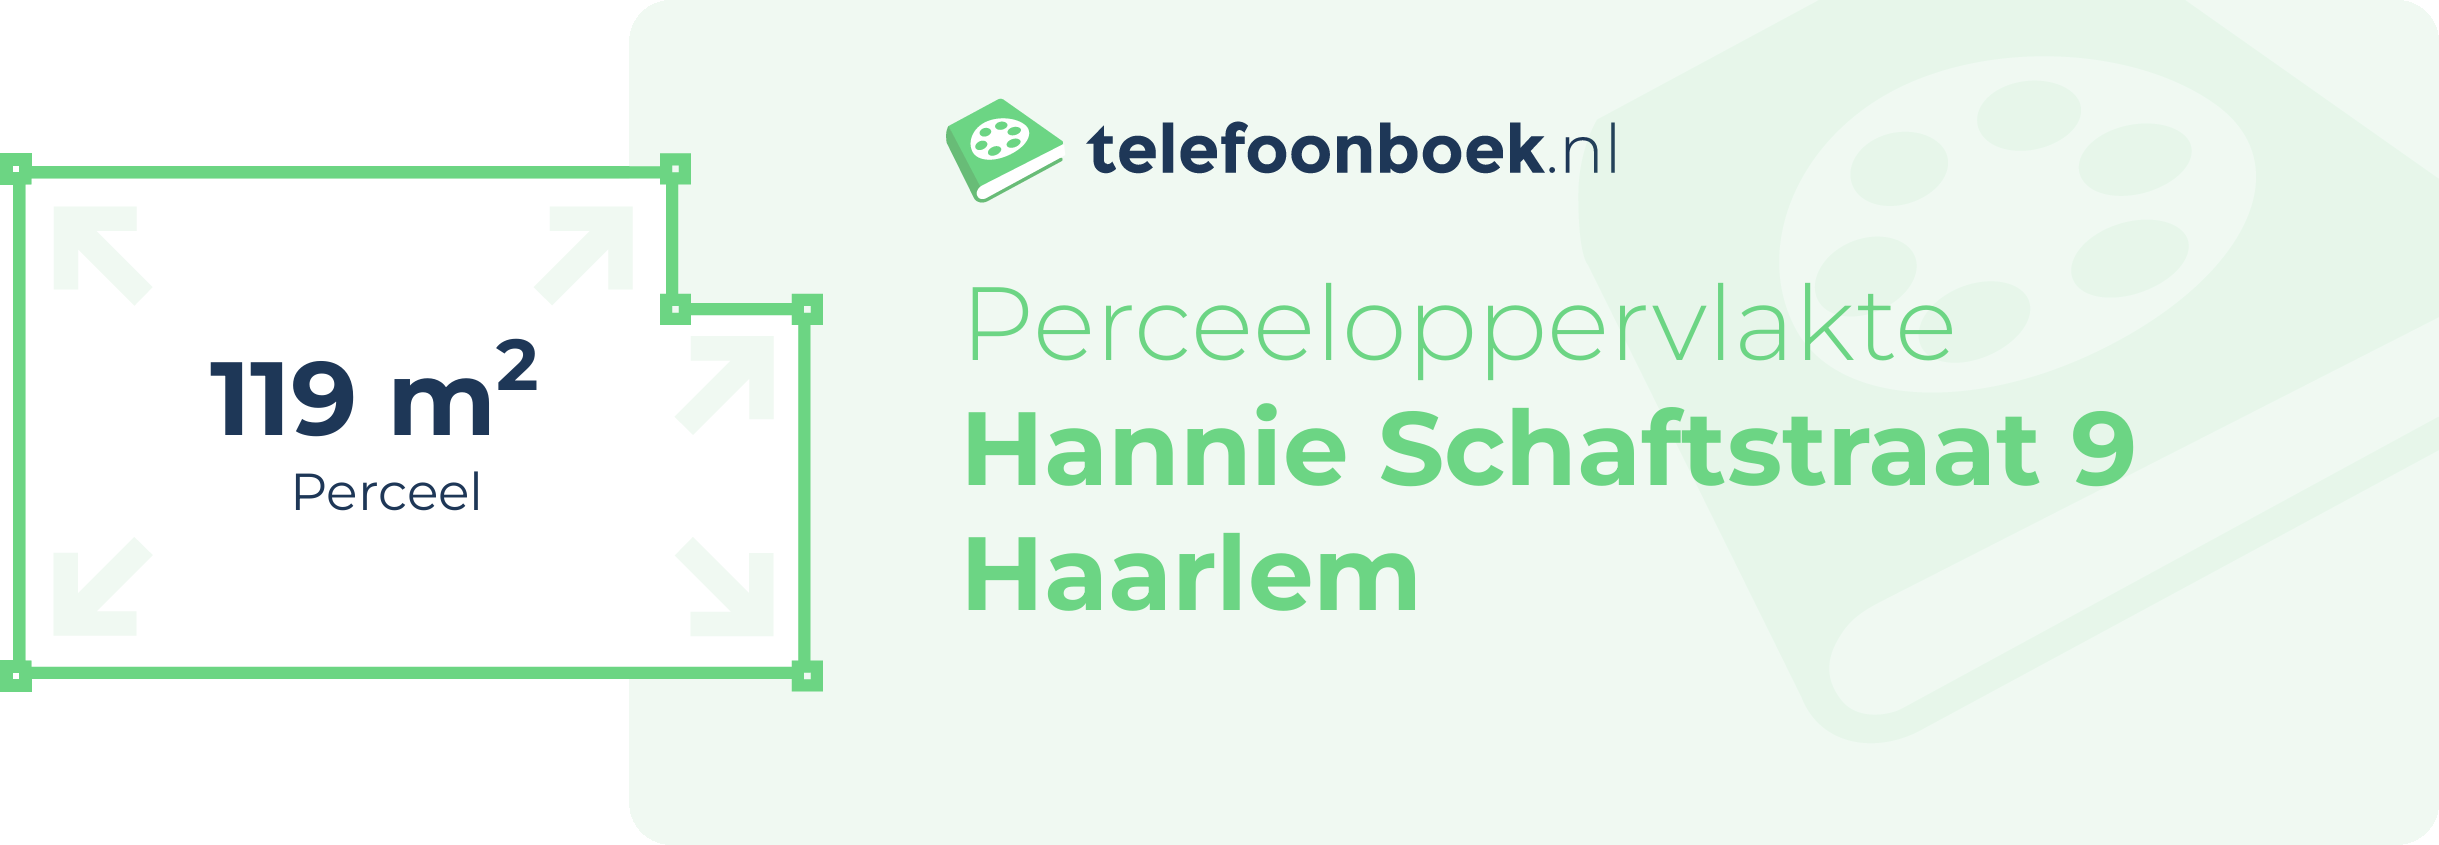 Perceeloppervlakte Hannie Schaftstraat 9 Haarlem